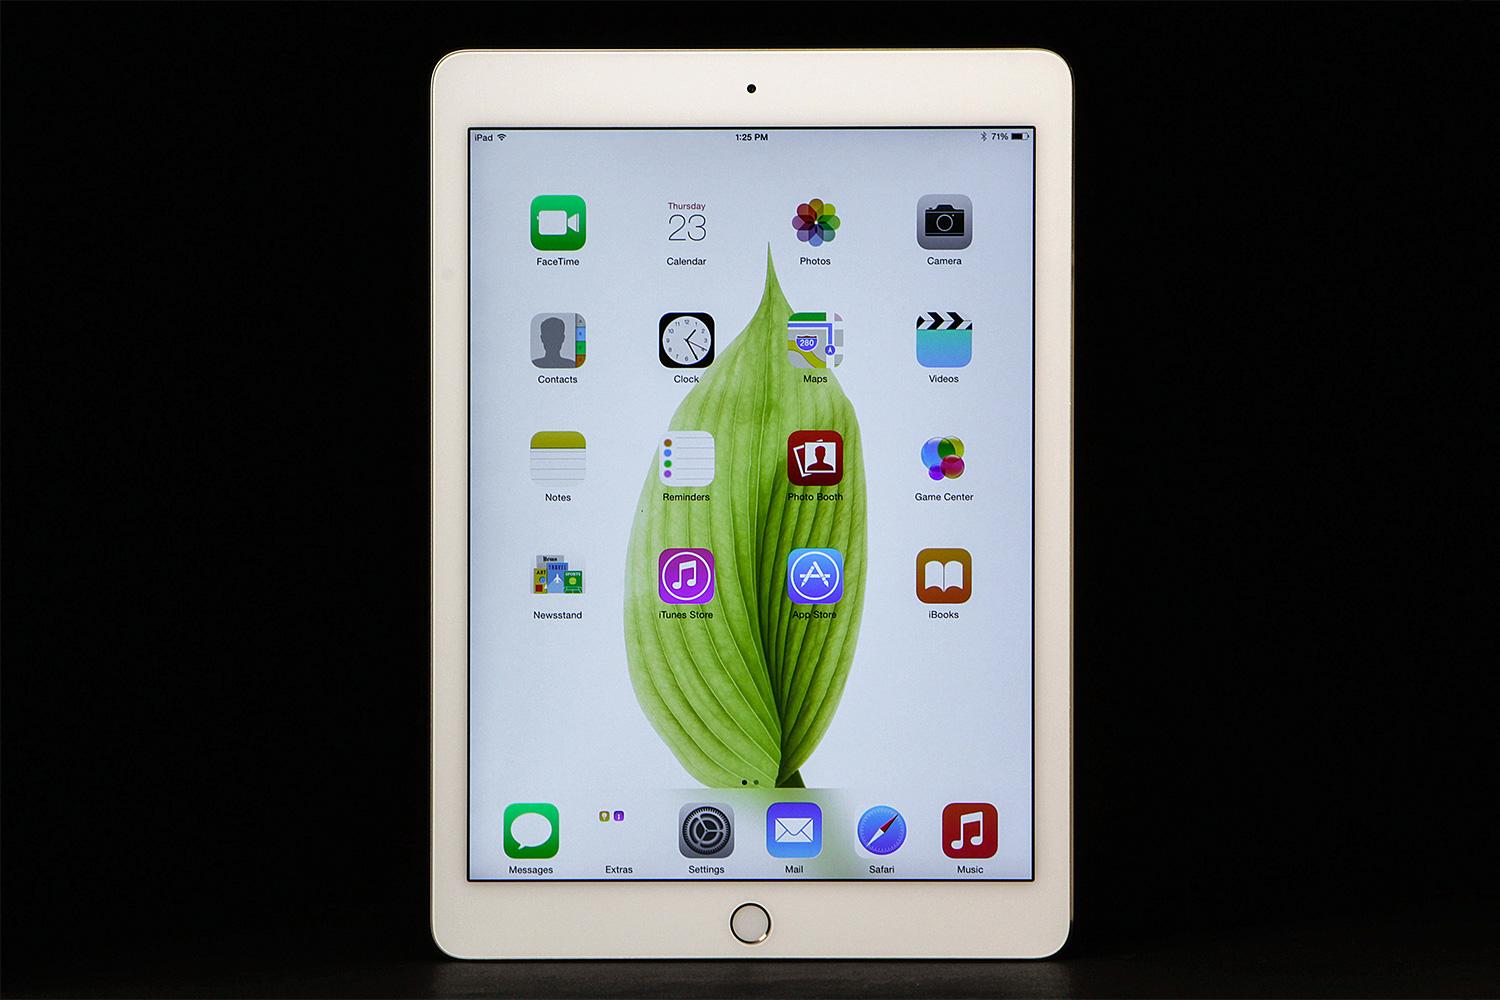 Apple iPad Air 2 16GB WiFi A1566 Gold at Affordable Mac